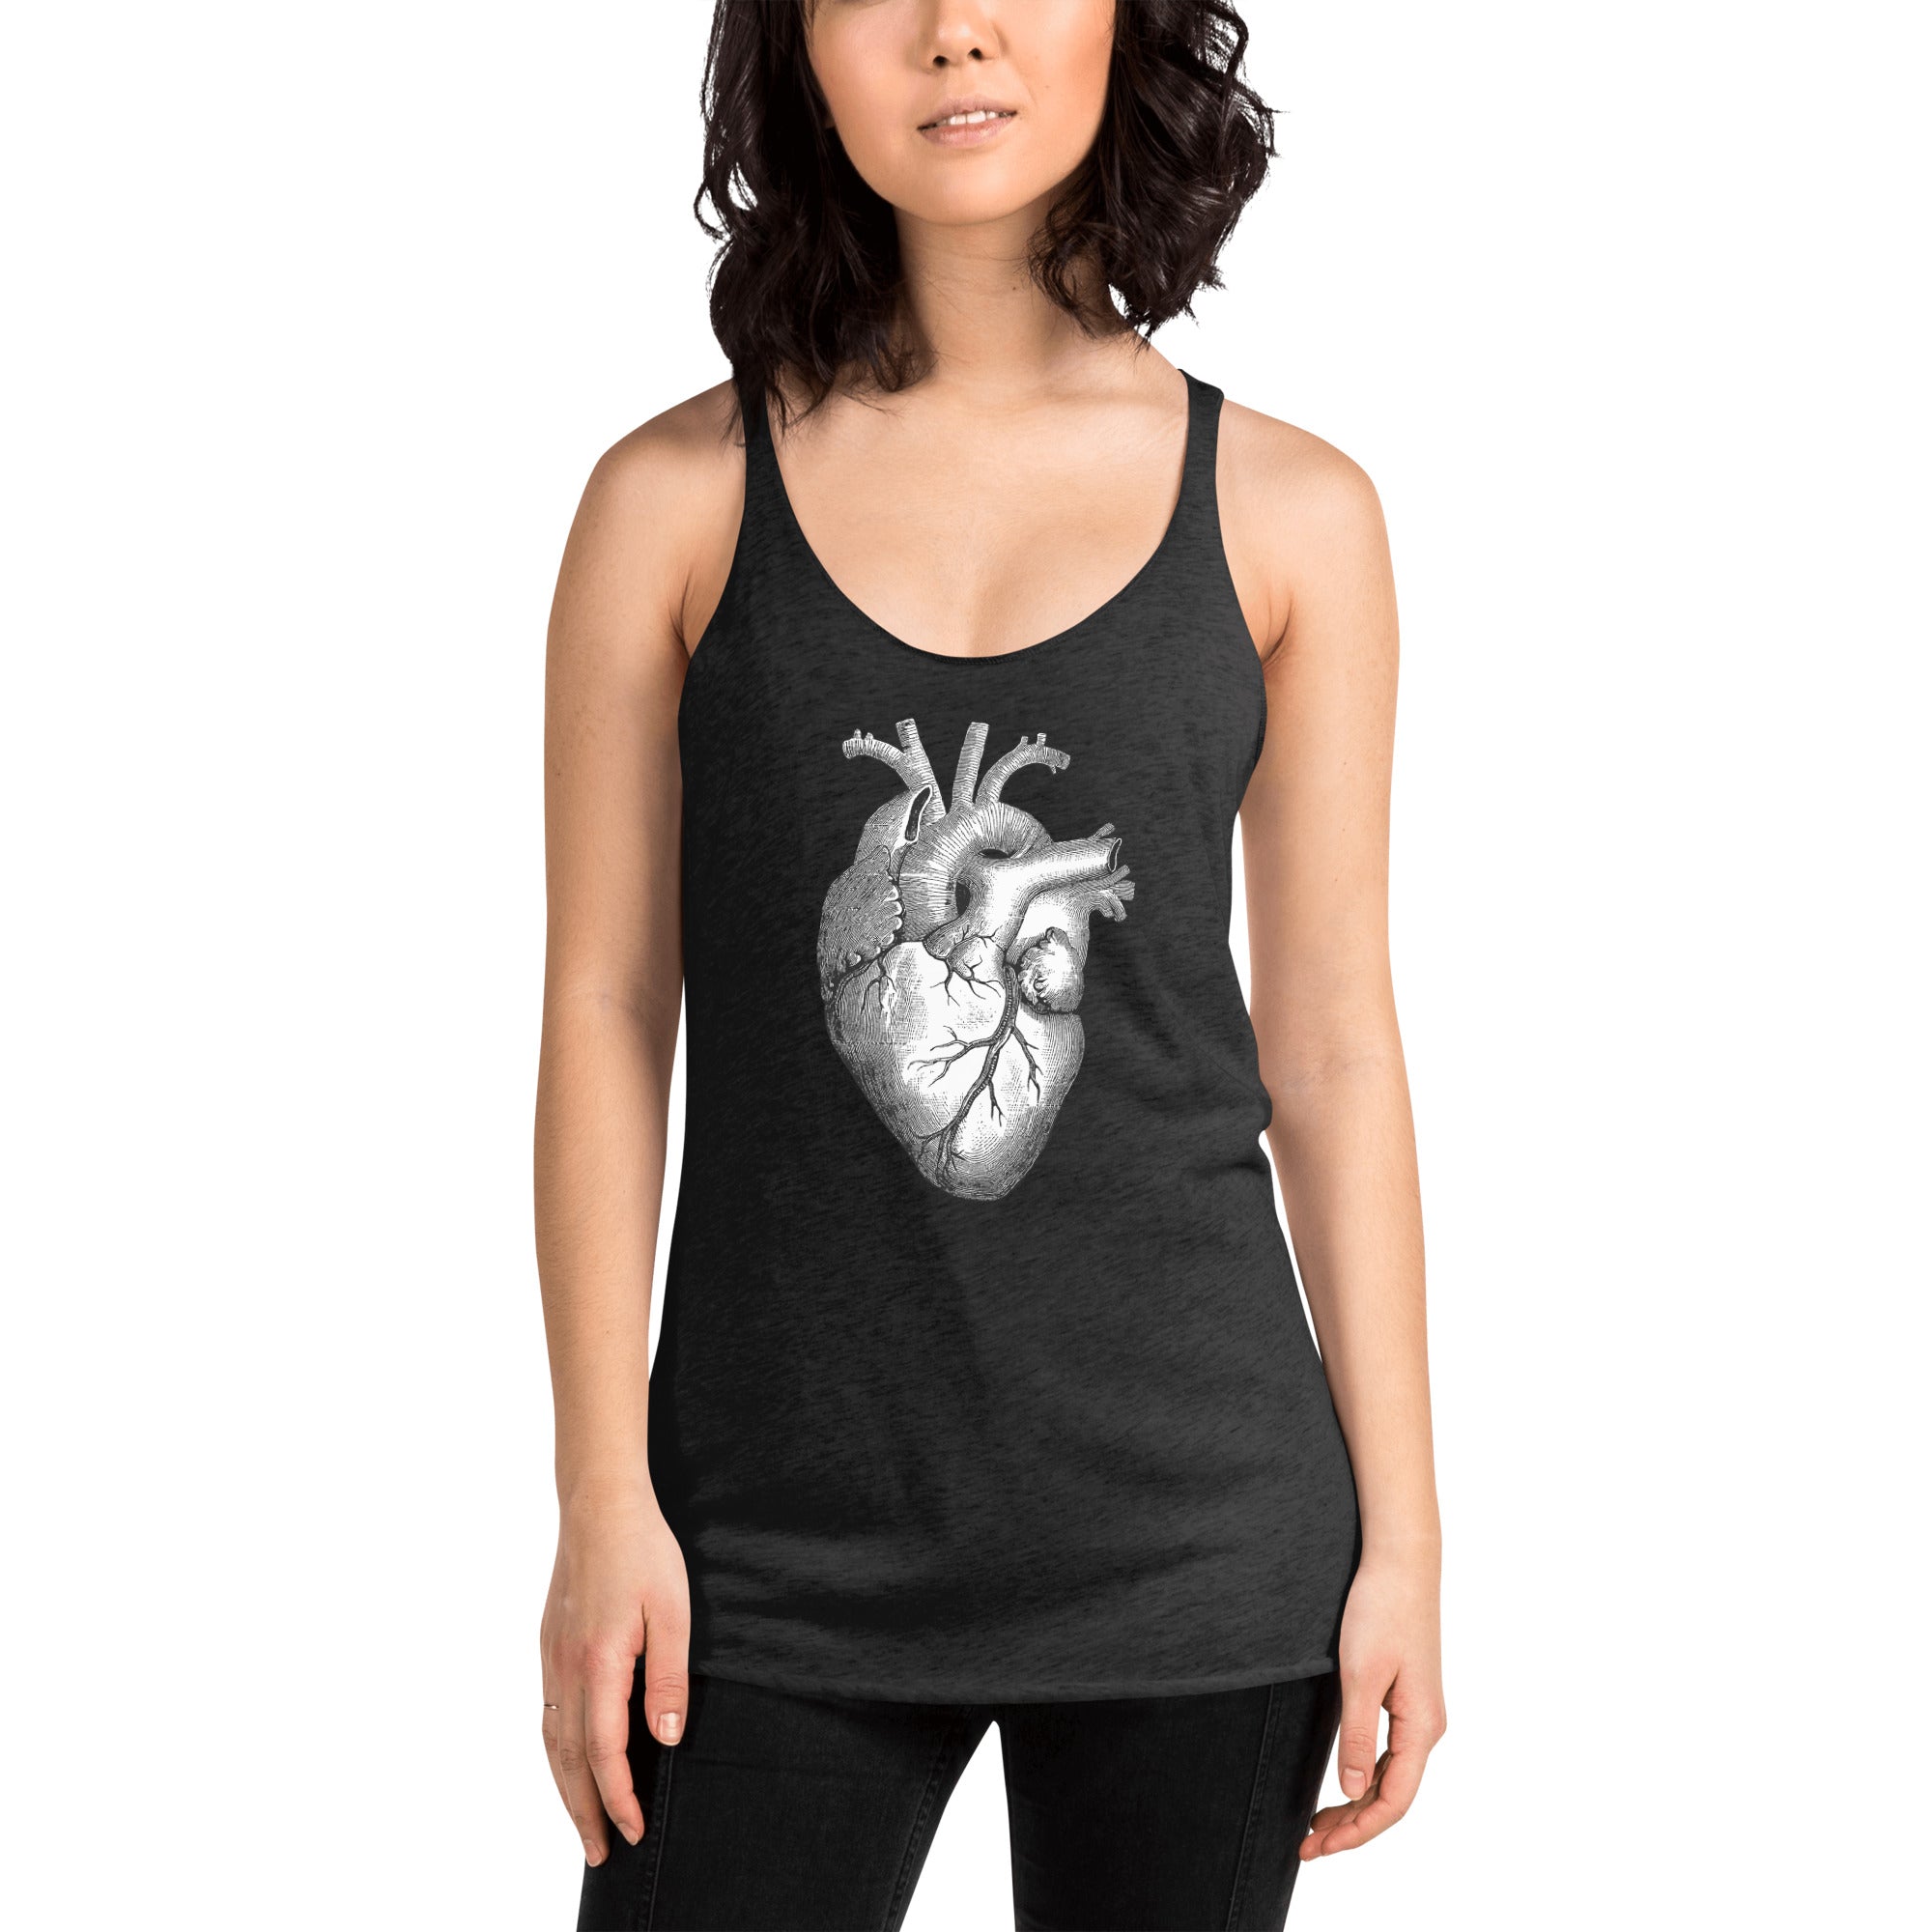 Anatomical Human Heart Medical Art Women's Racerback Tank Top Shirt Black and White - Edge of Life Designs